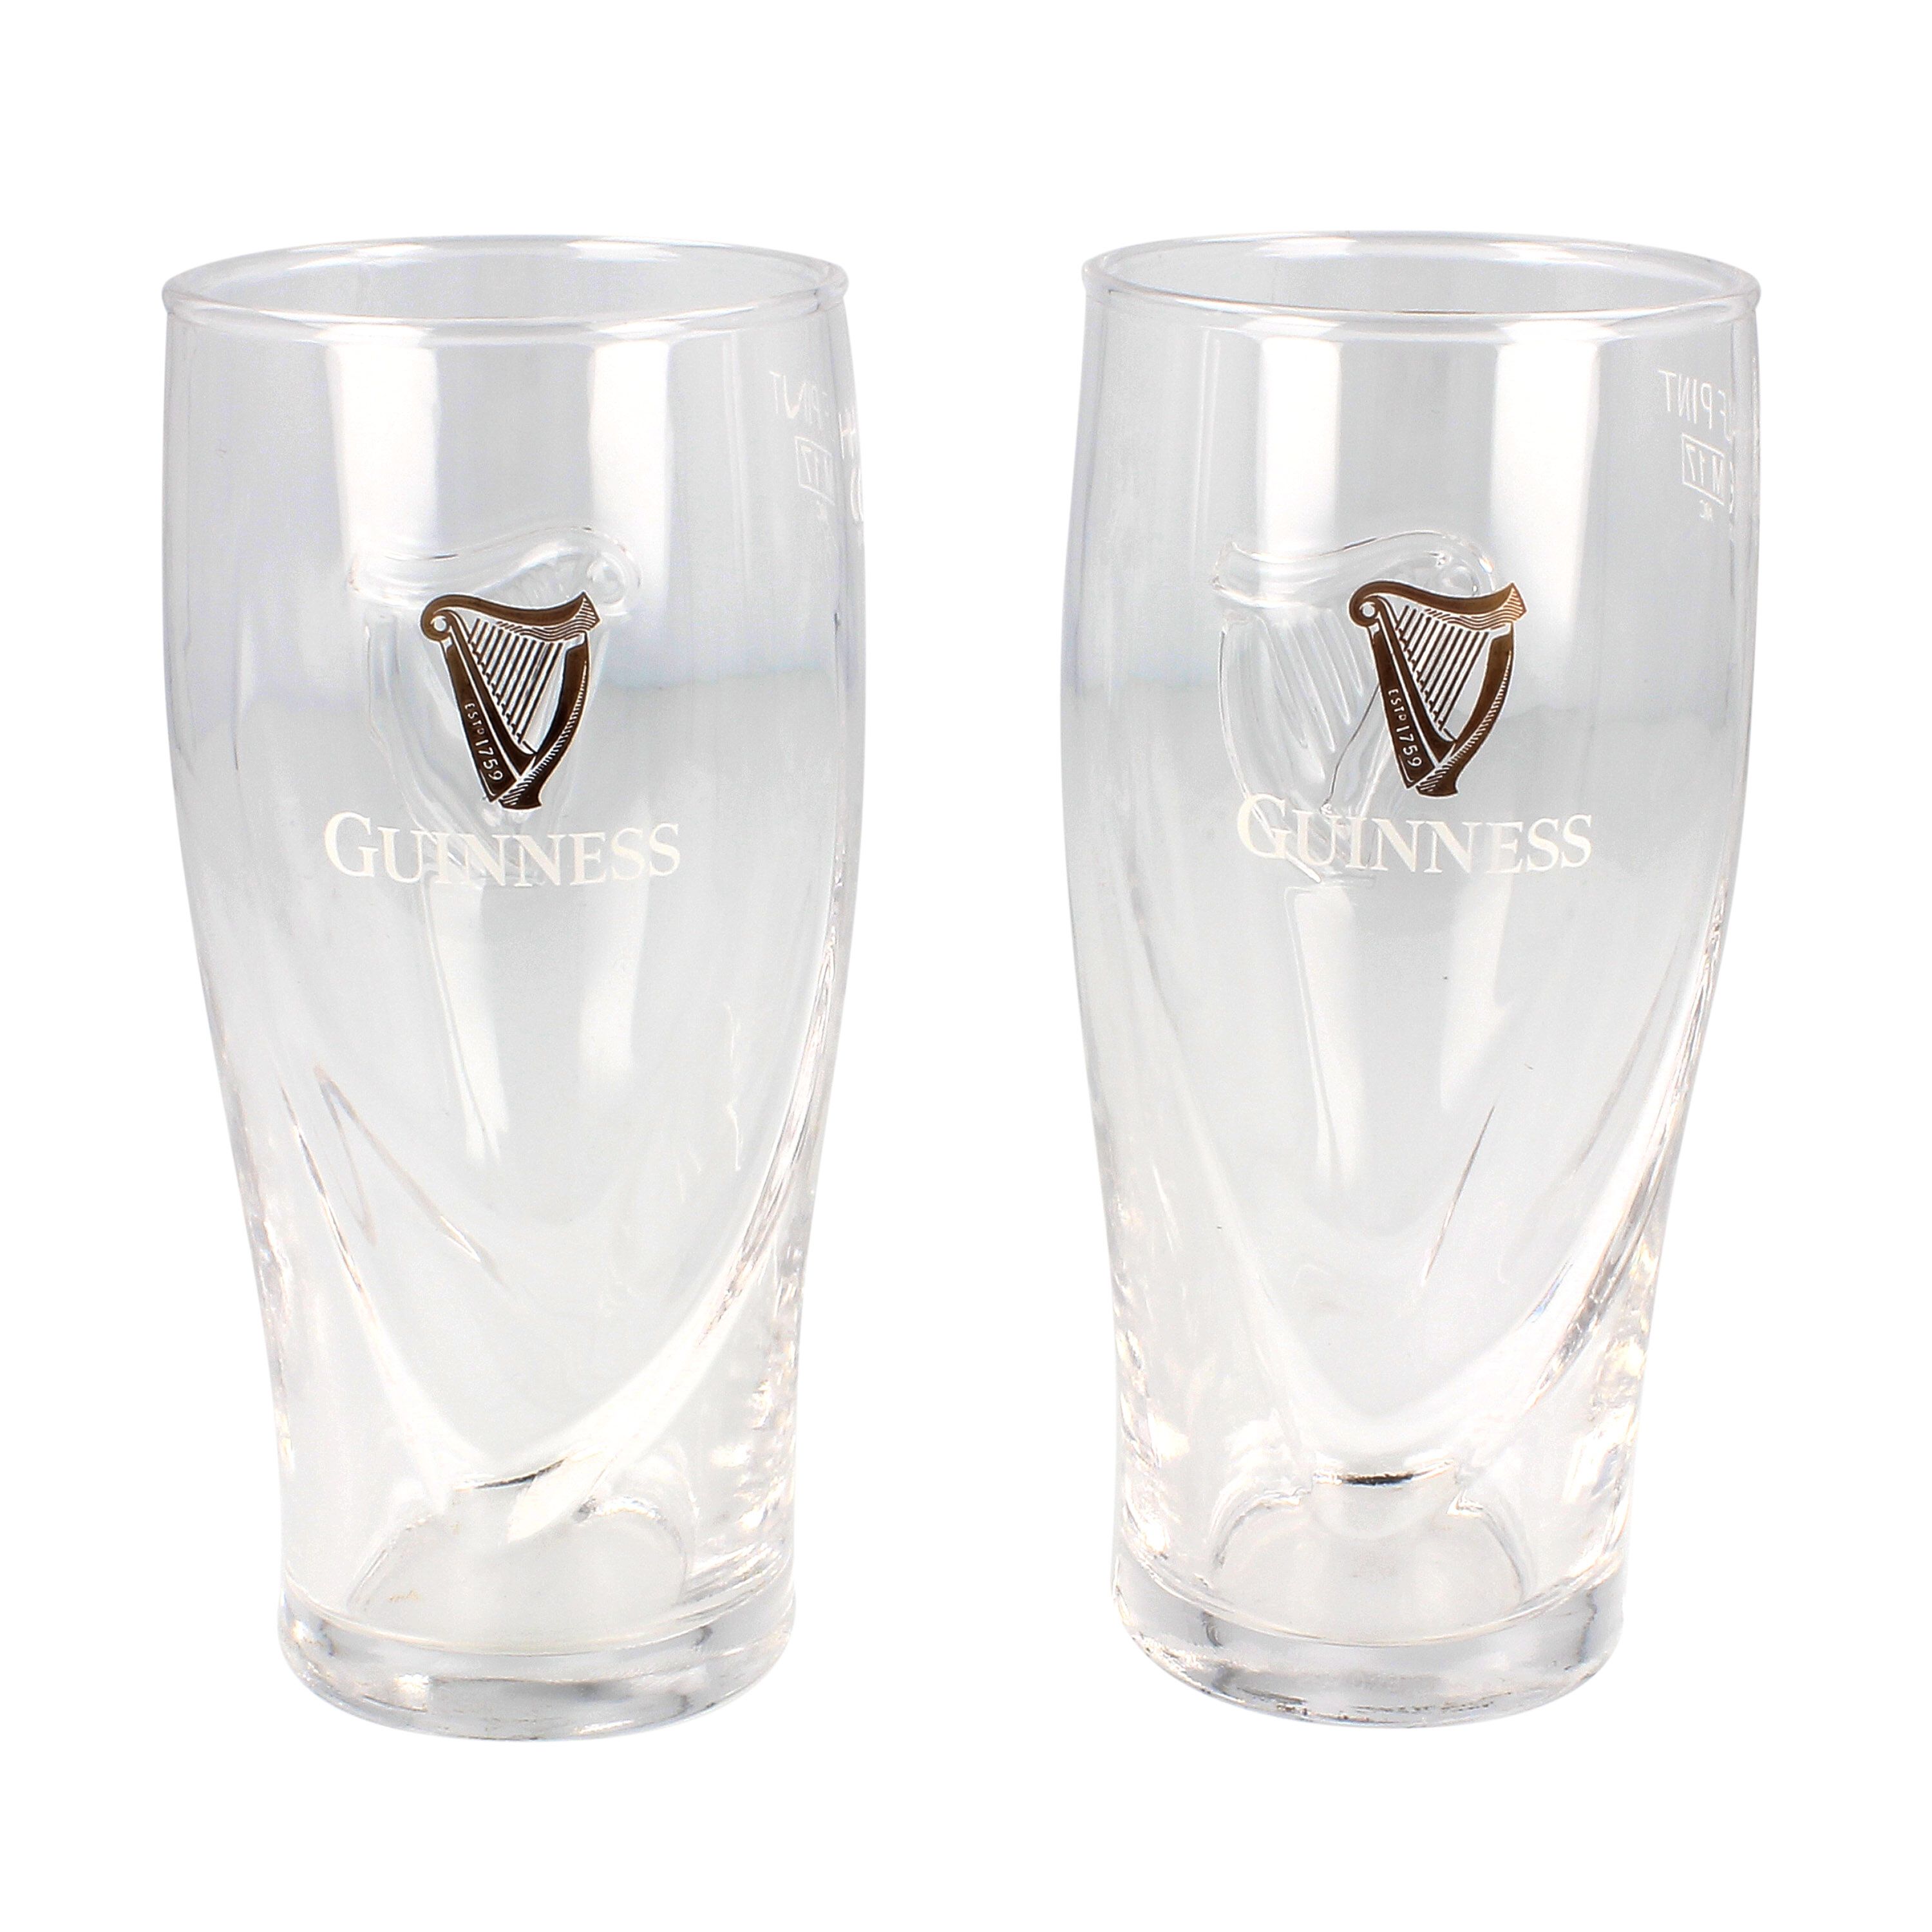 Half & Half Guinness Harp Pint Beer Glass #1026 16 oz 